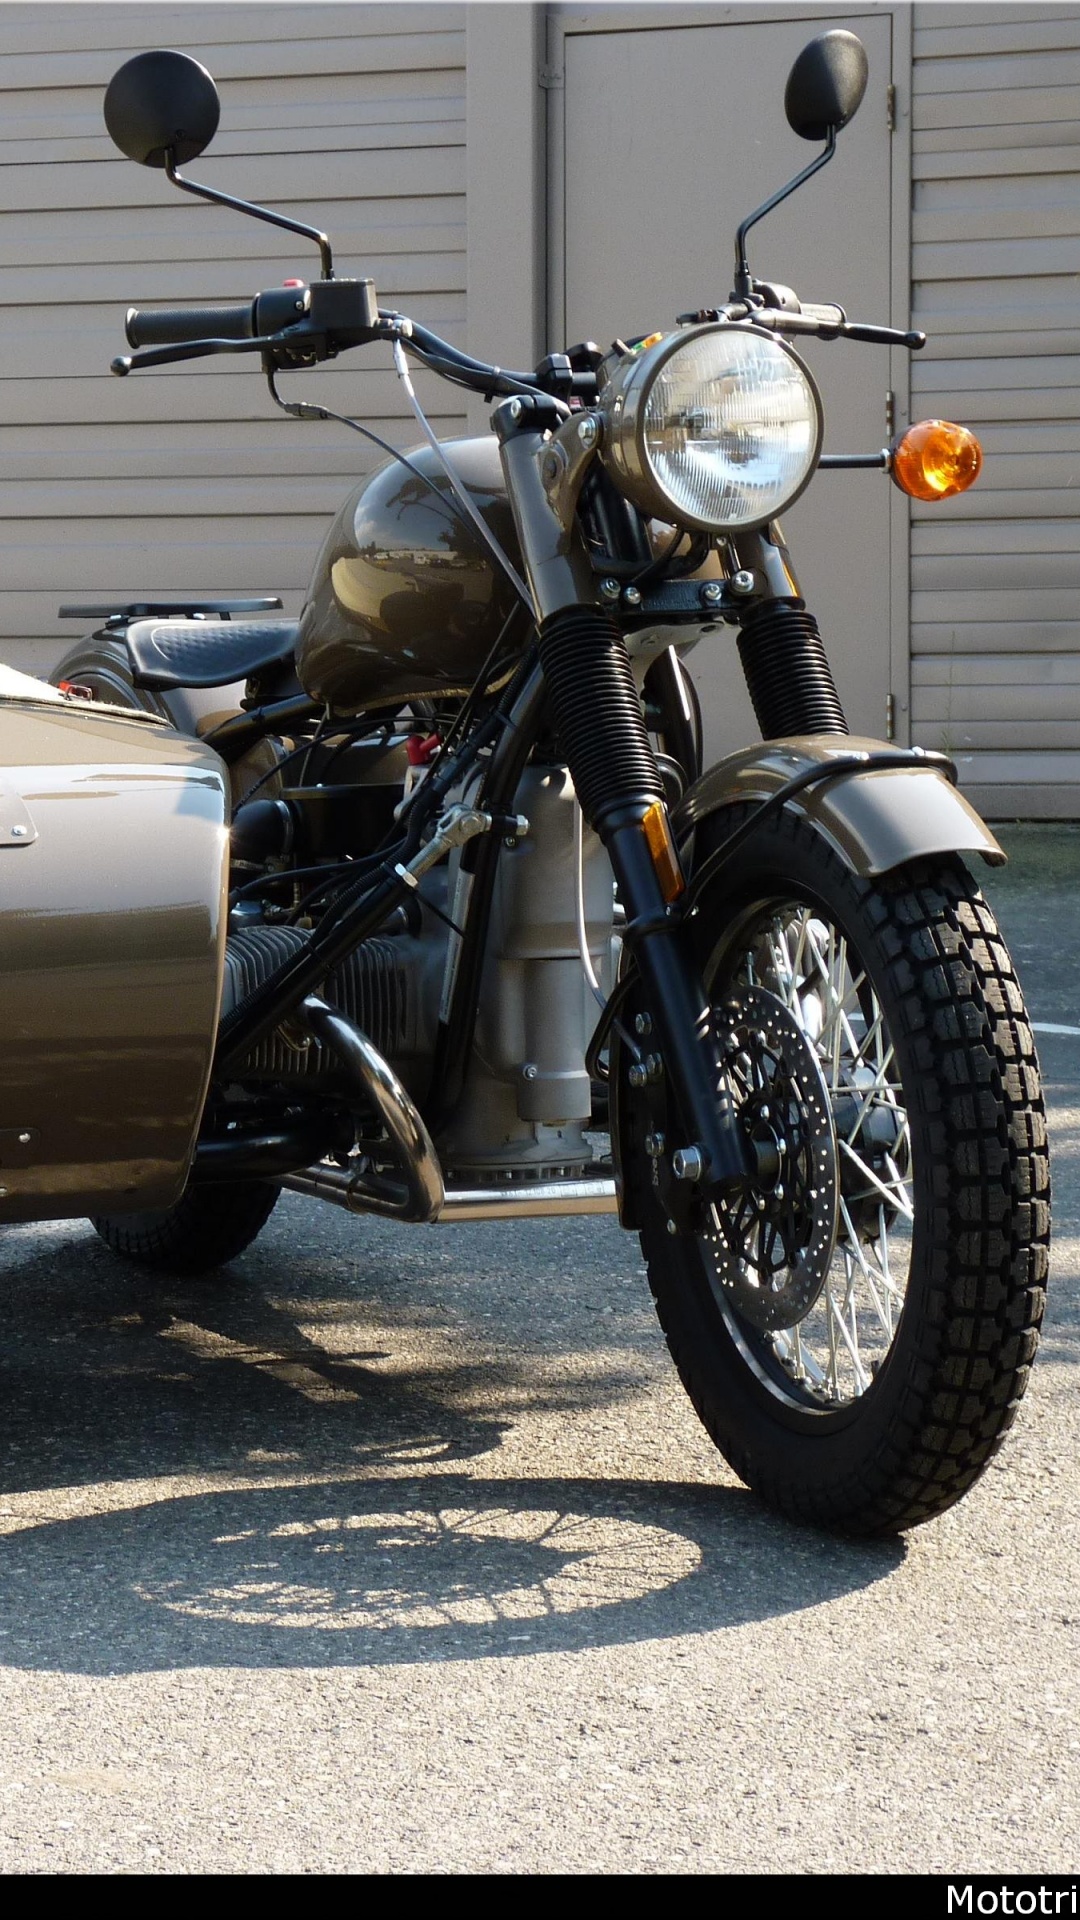 Motocicleta Cruiser Negra y Plateada. Wallpaper in 1080x1920 Resolution